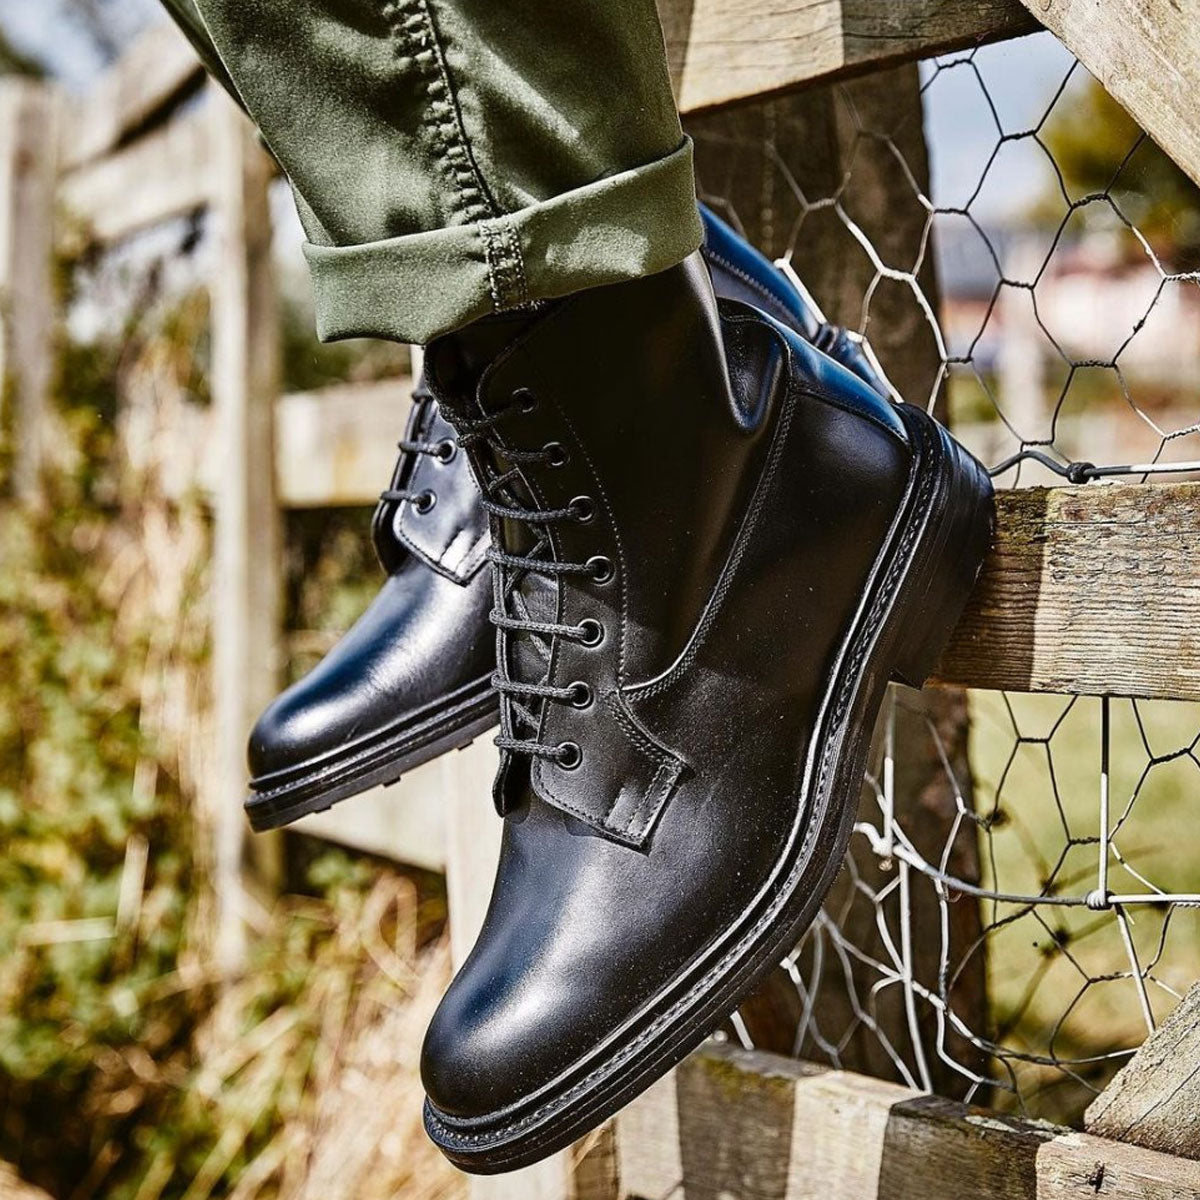 TRICKER'S Burford Boots - Mens Dainite or Leather Sole - Black Calf